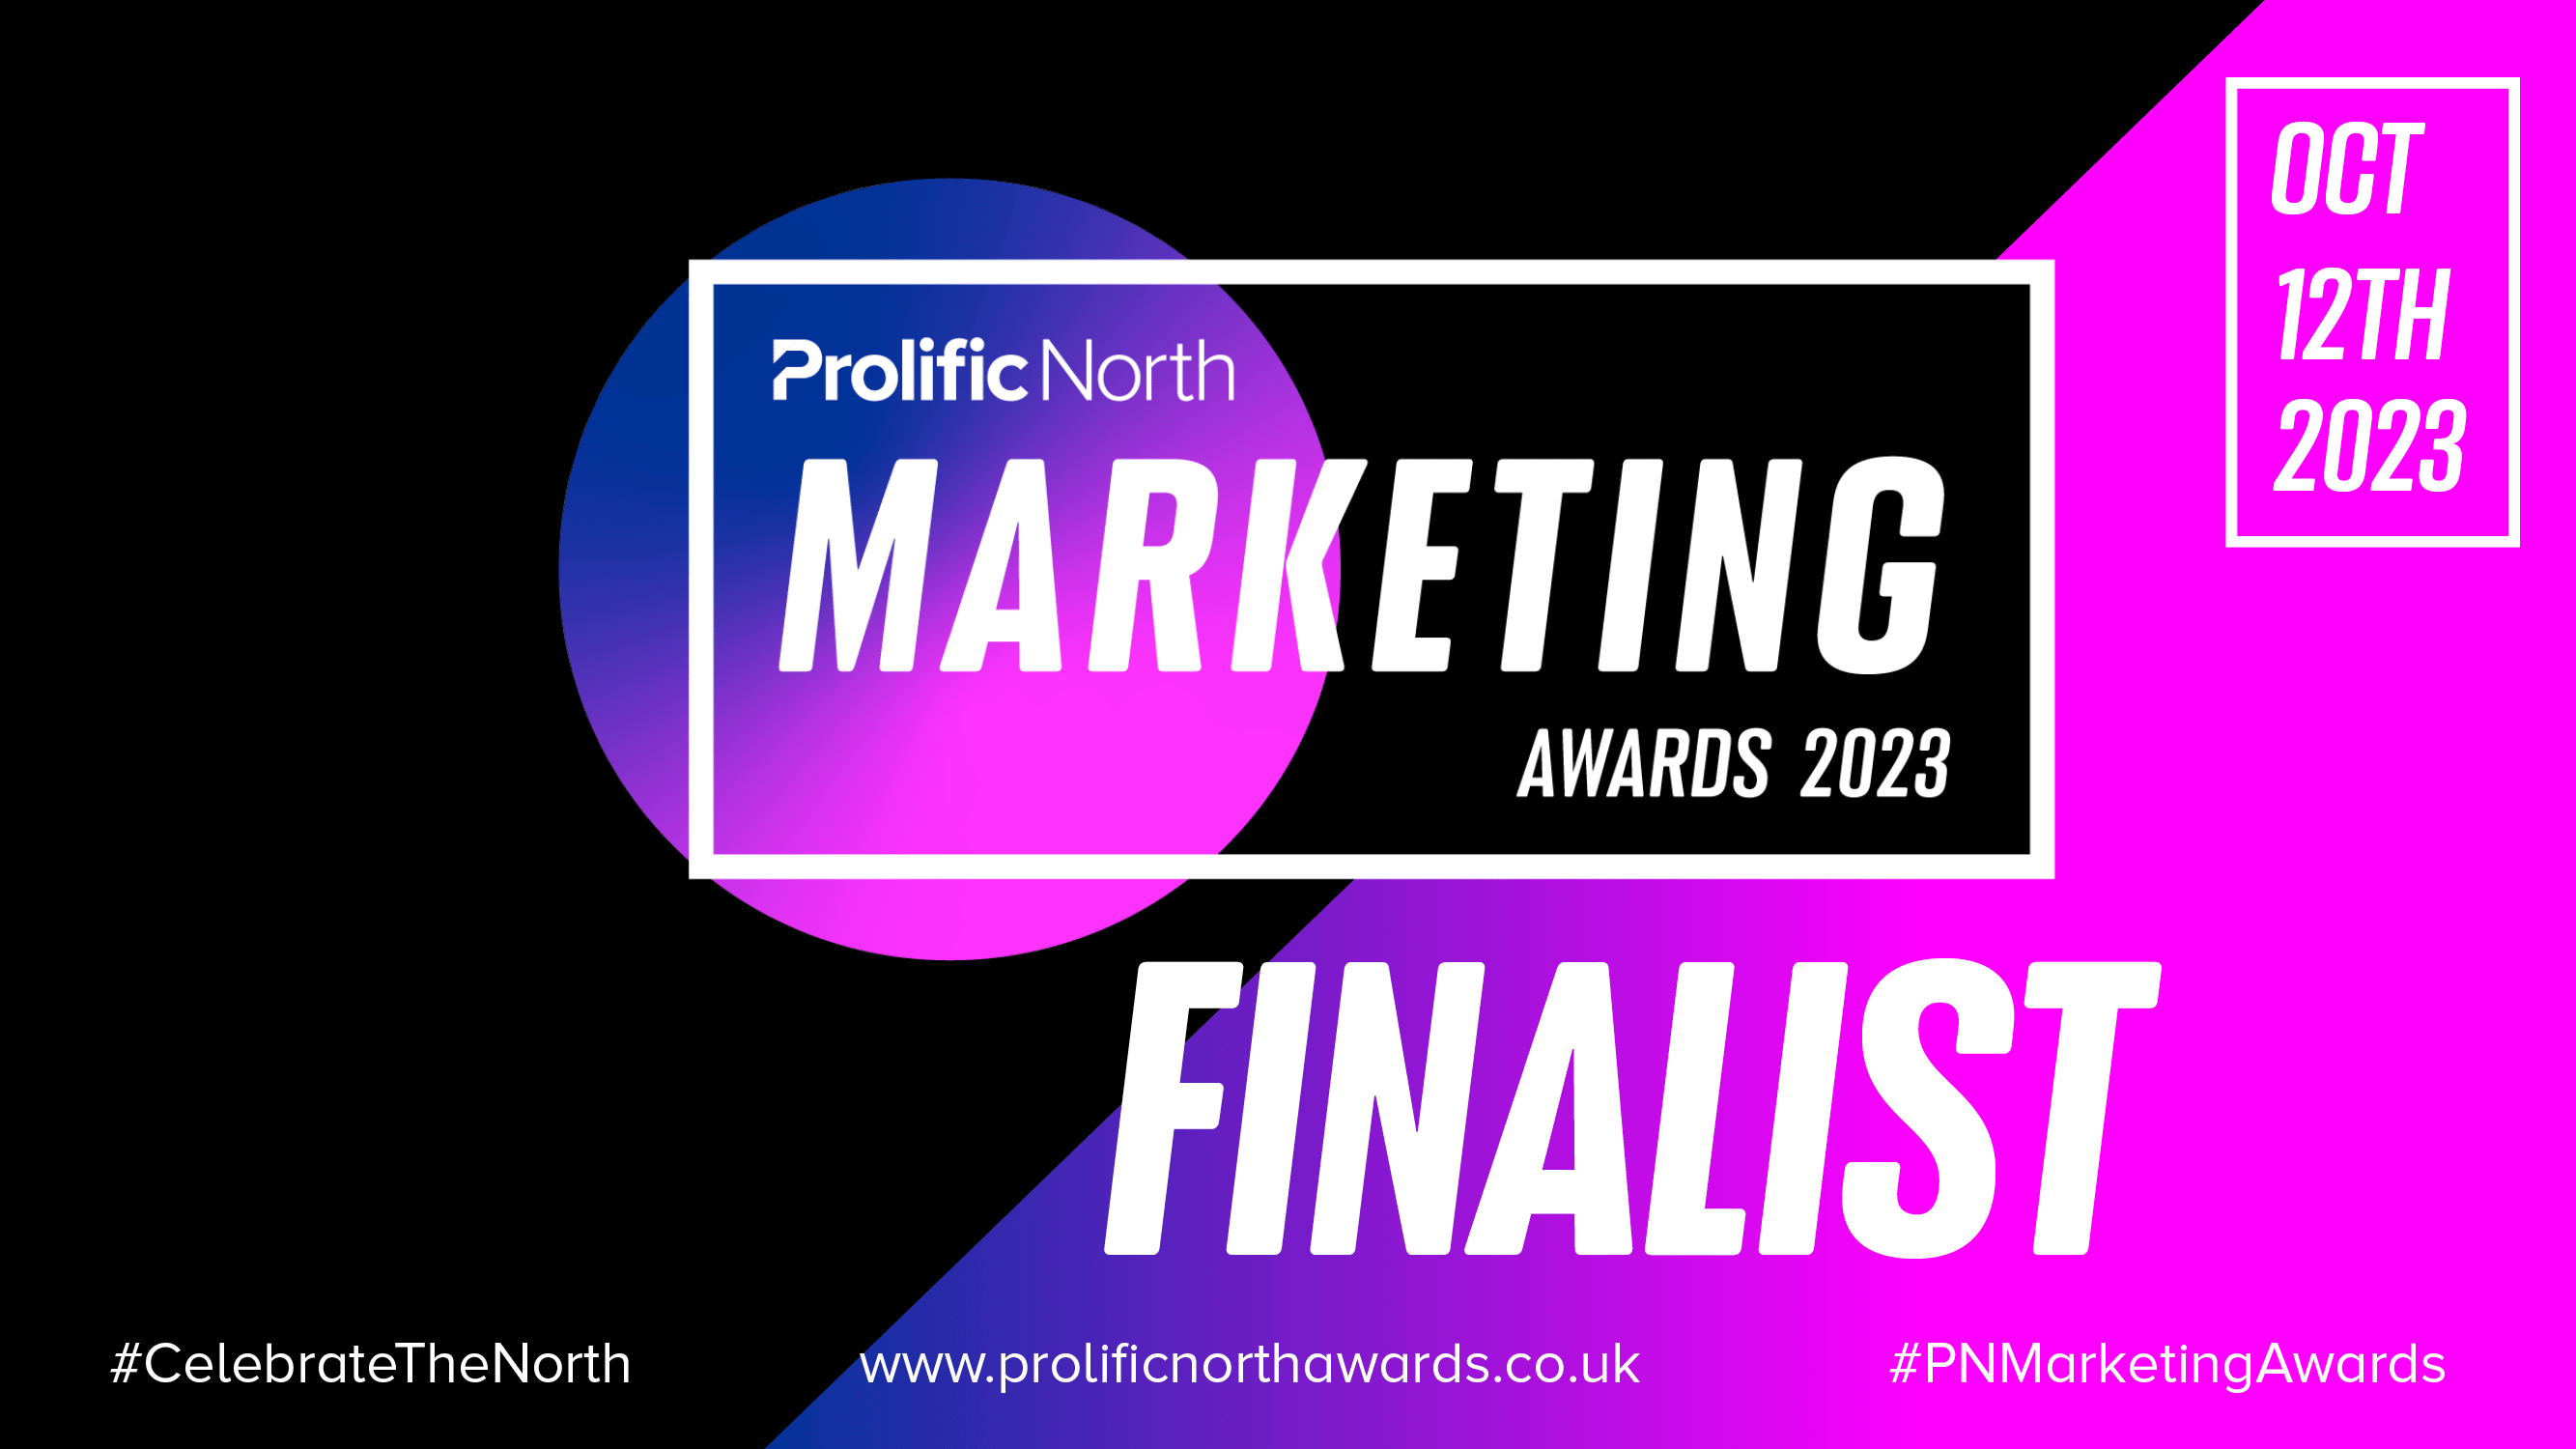 Prolific North Marketing Awards